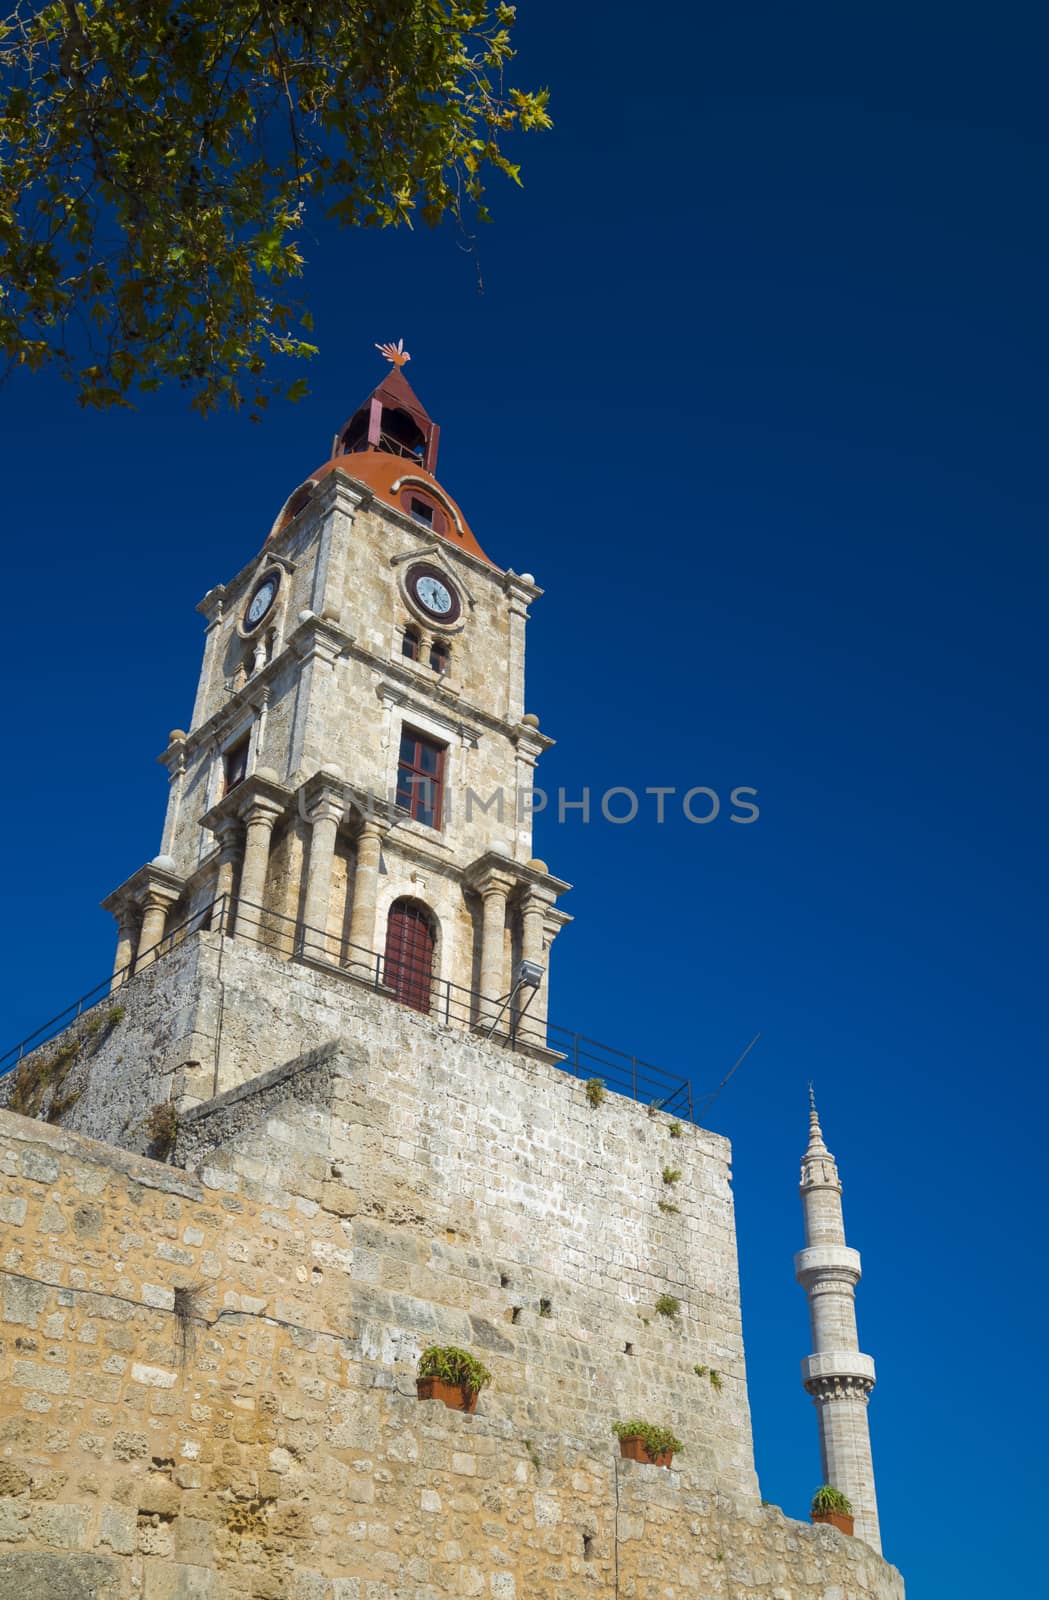 Rhodes Landmarks Suleiman Mosque and Clock Tower, Greece